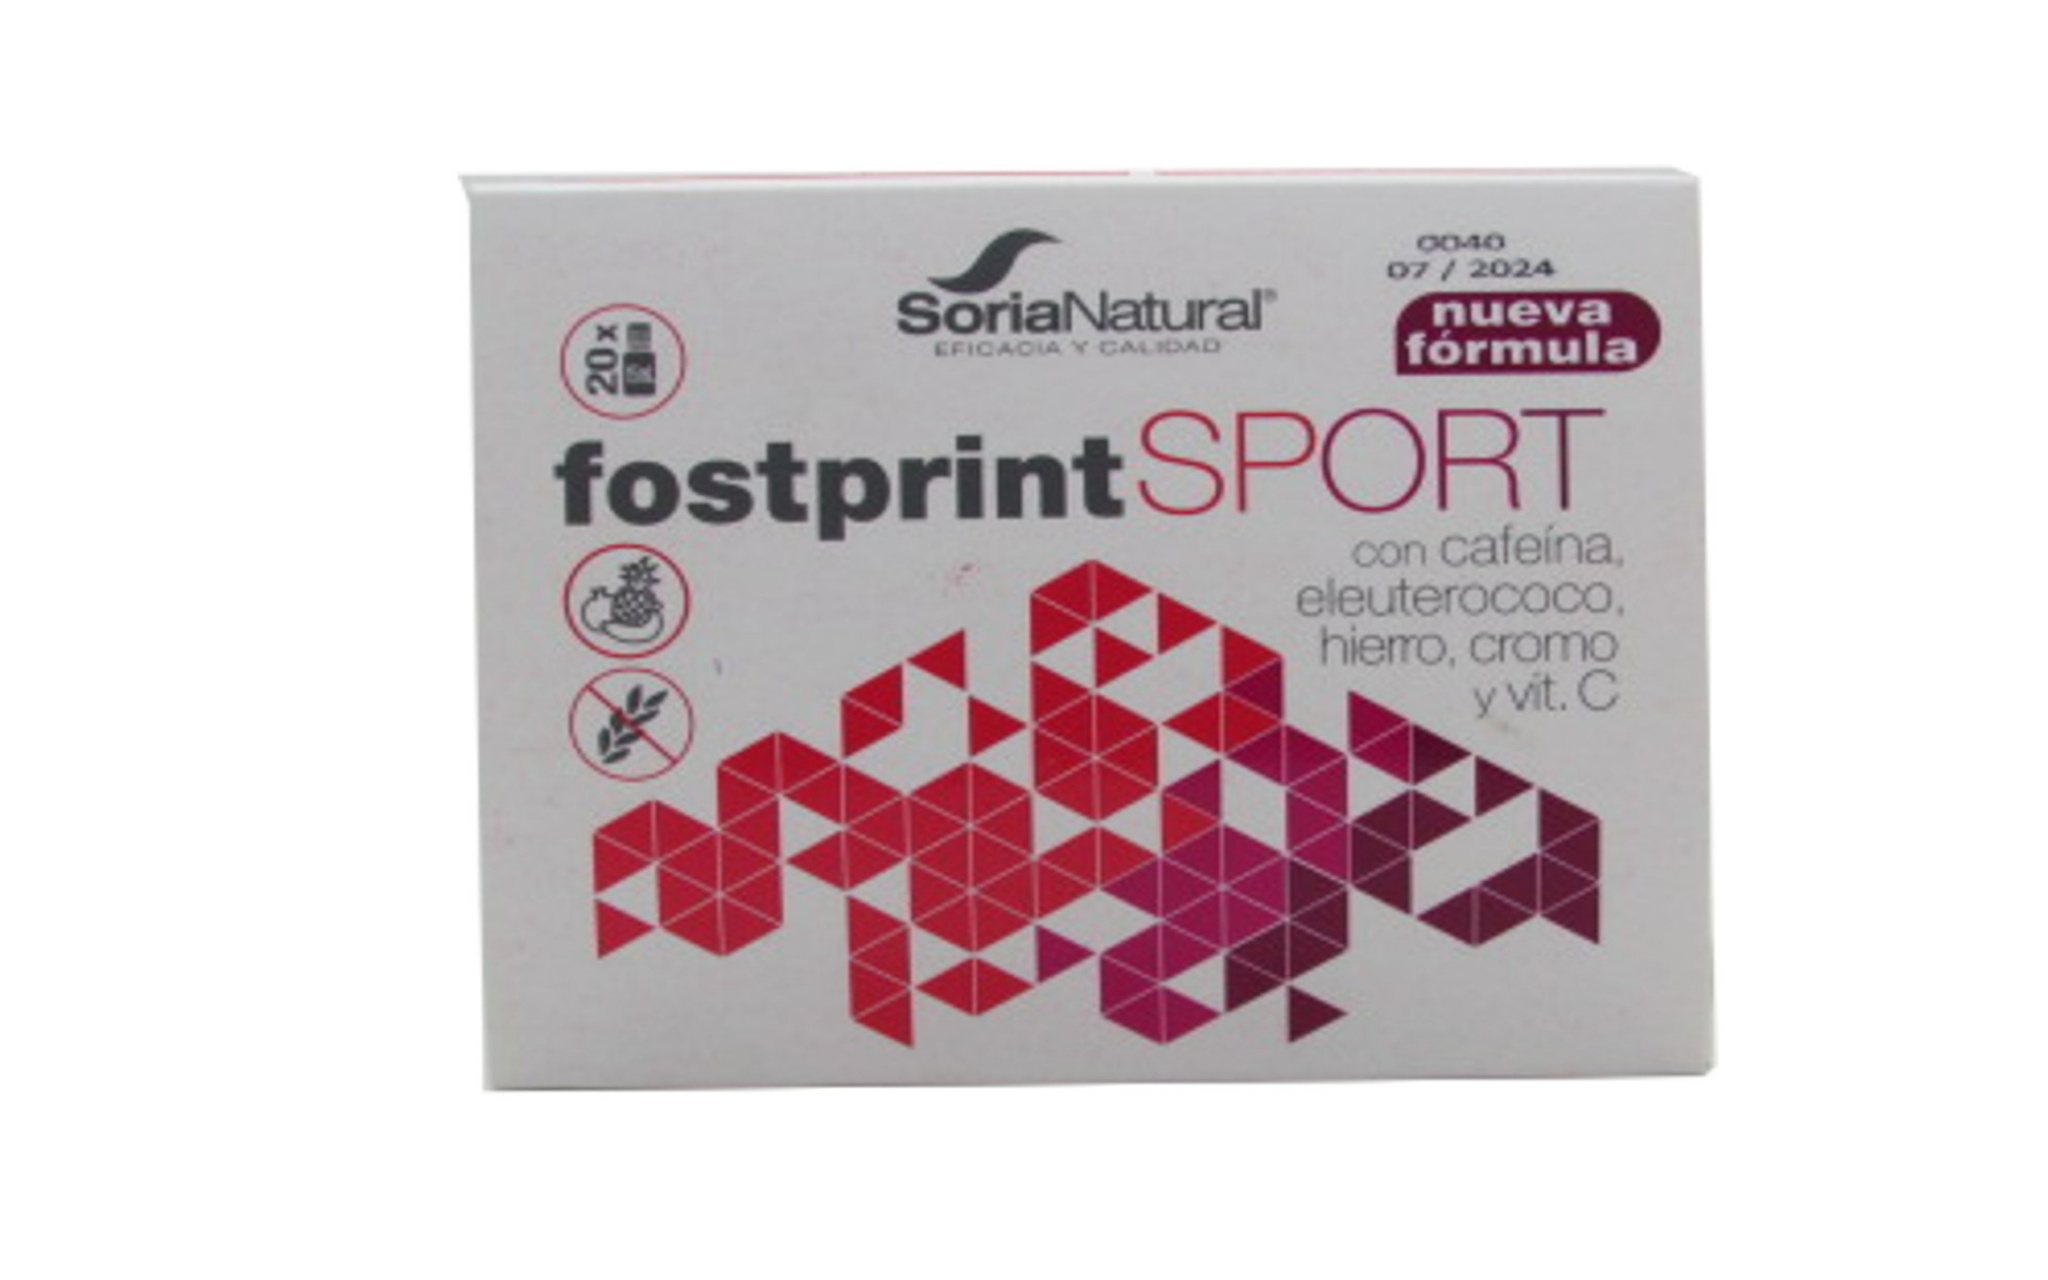 Fostprint Sport Soria Natural